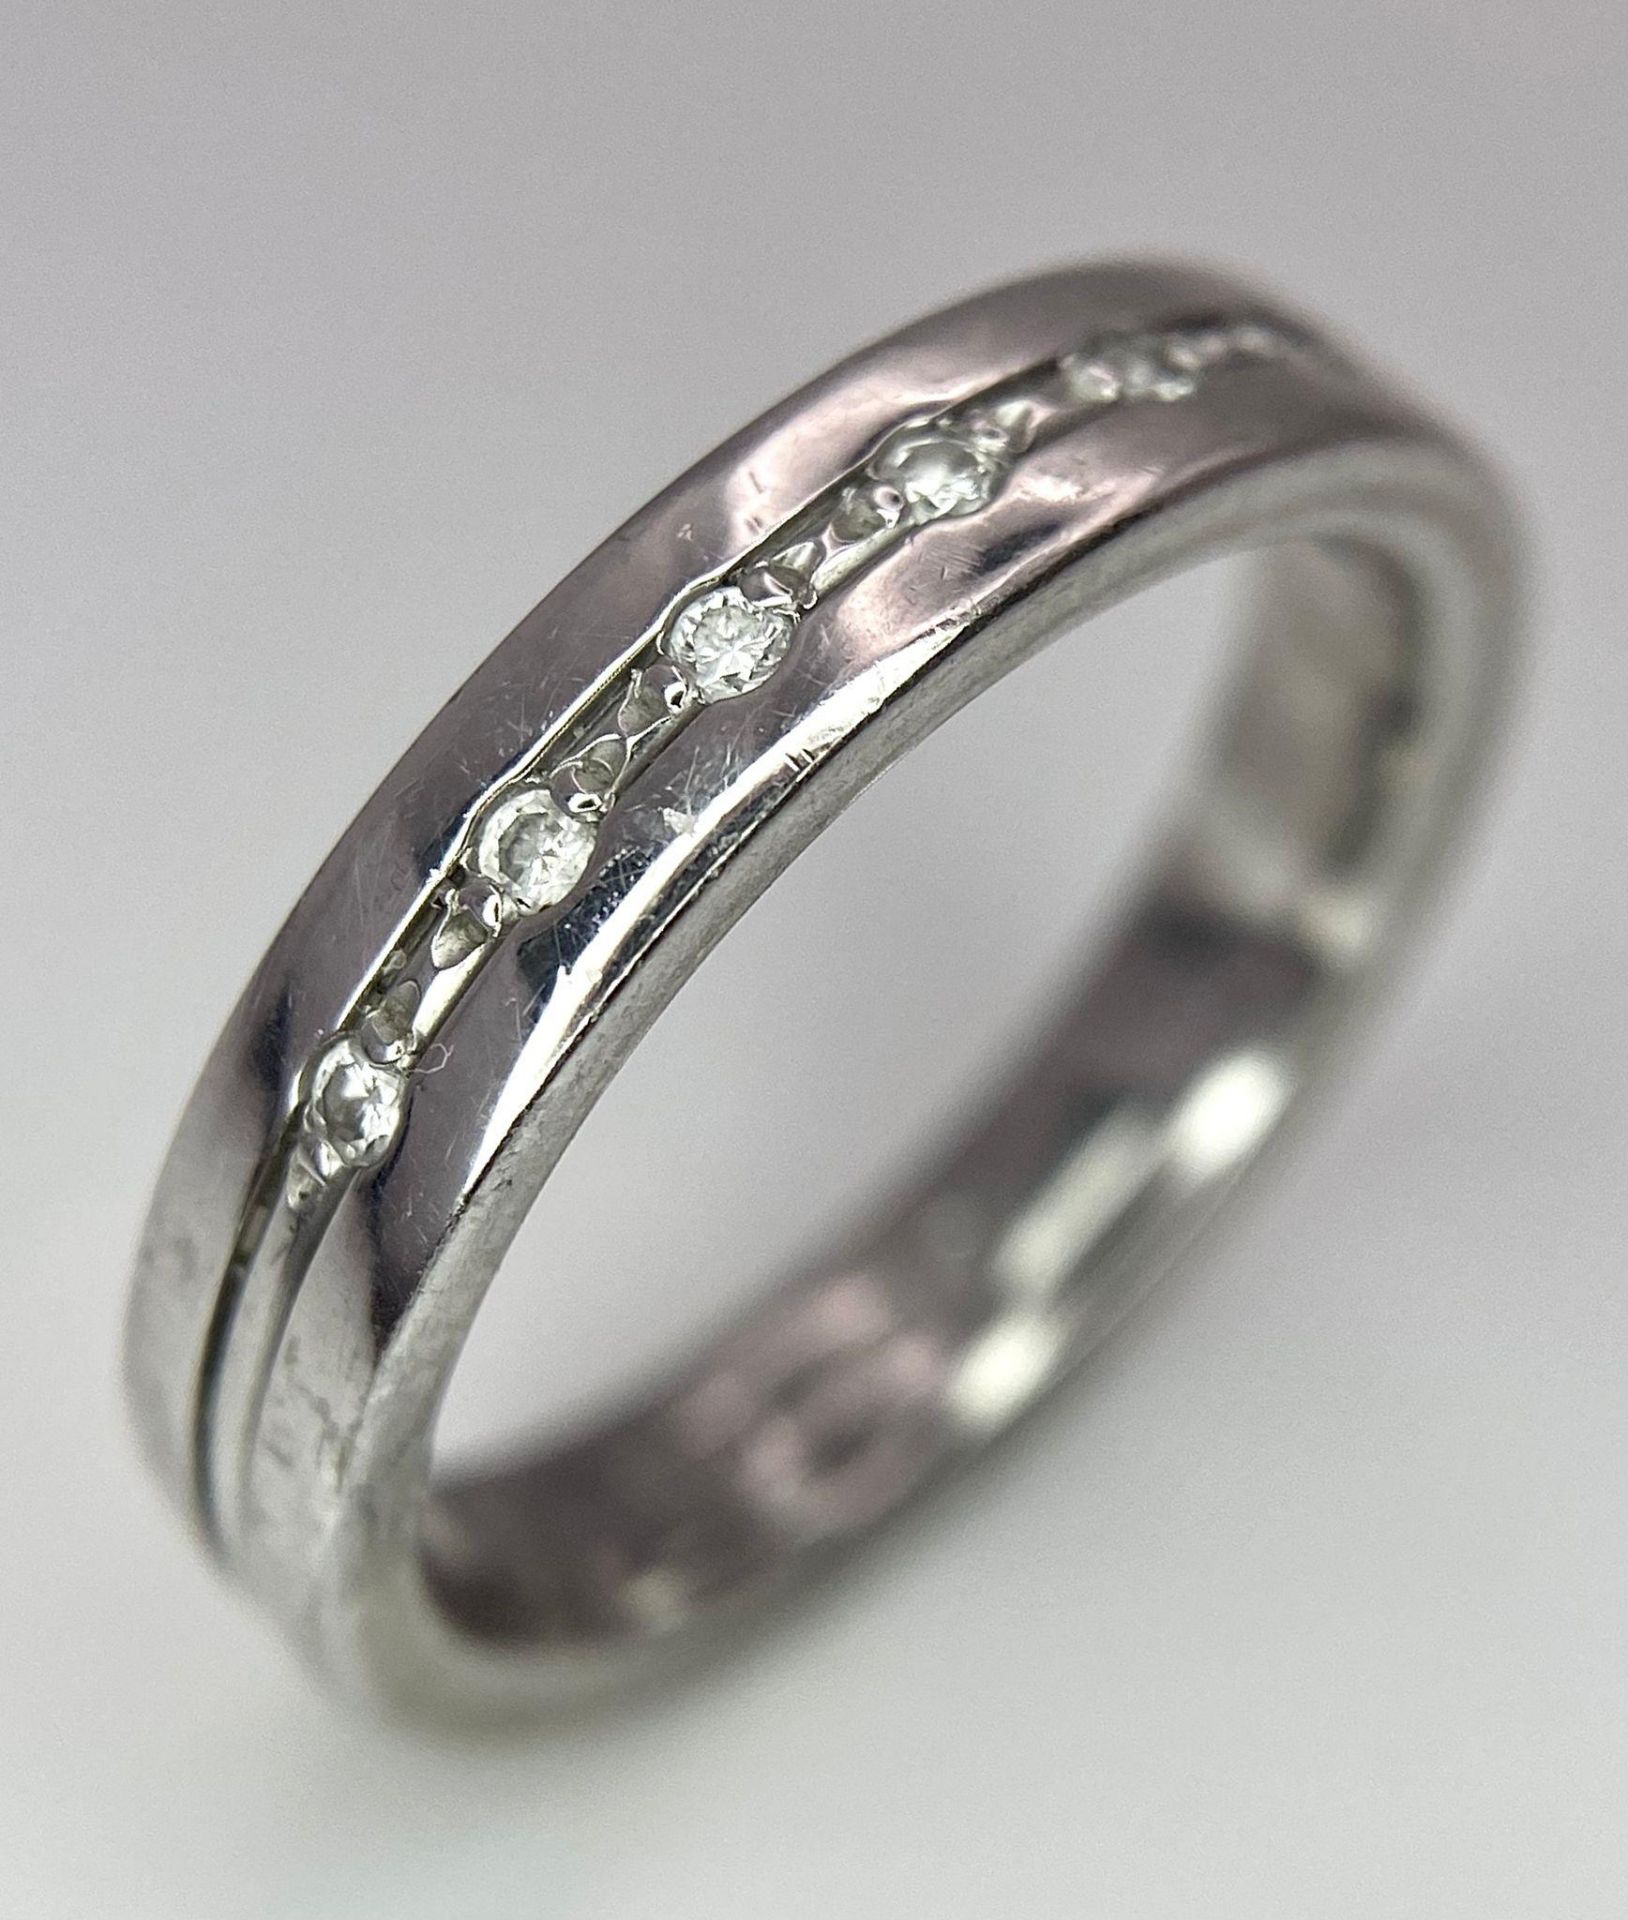 An 18 K white gold, diamond set band ring, size: M, weight: 6.3 g